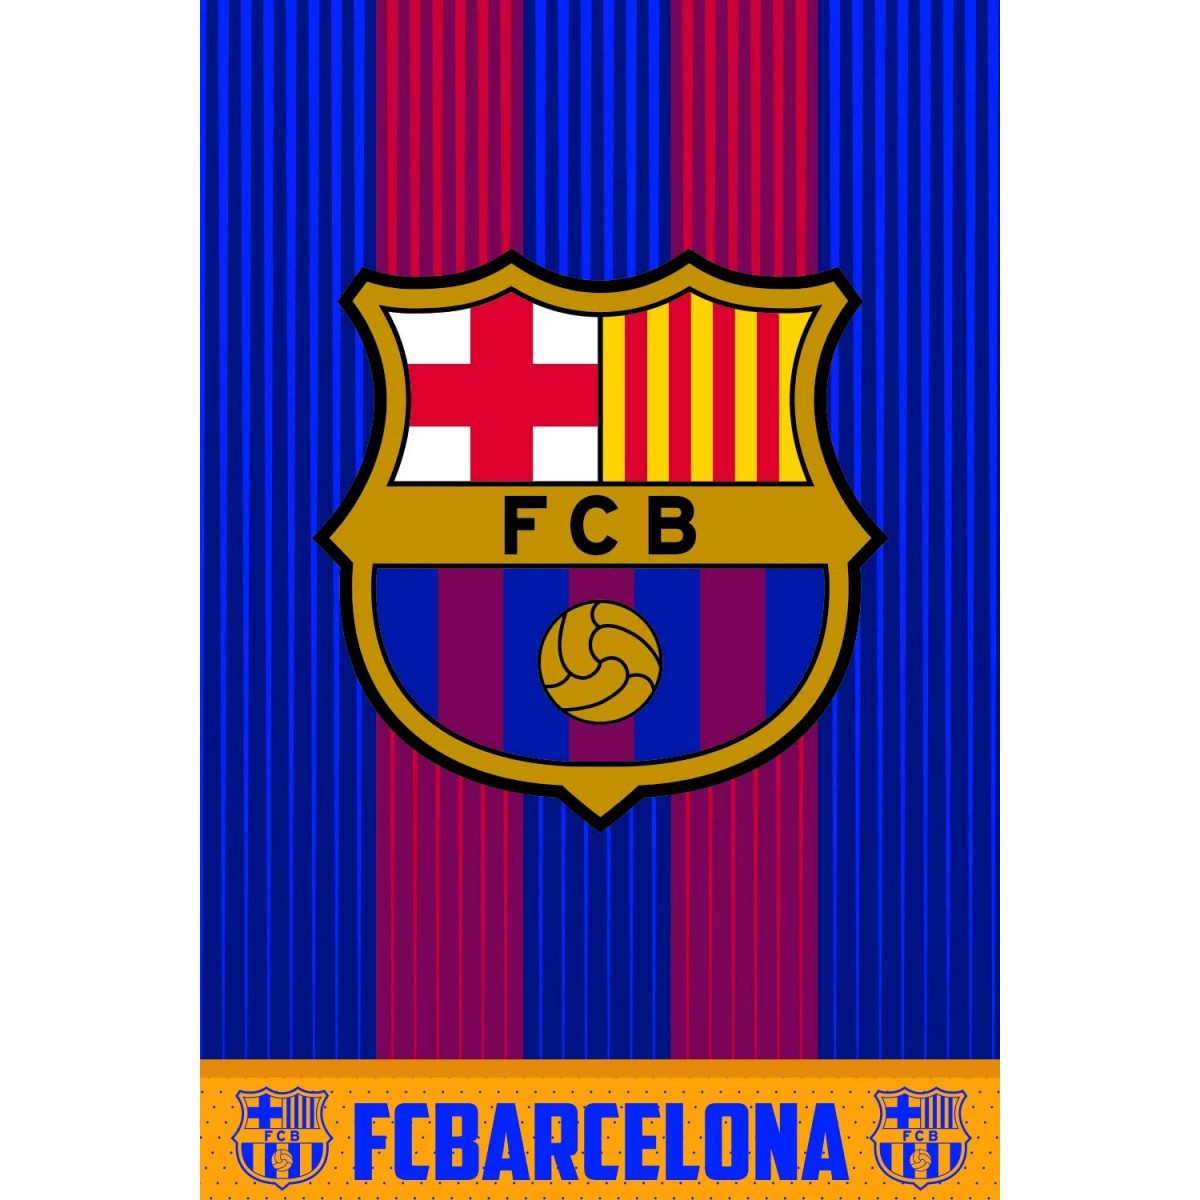 Coperta in pile F.C Barcelona, idea regalo, originale